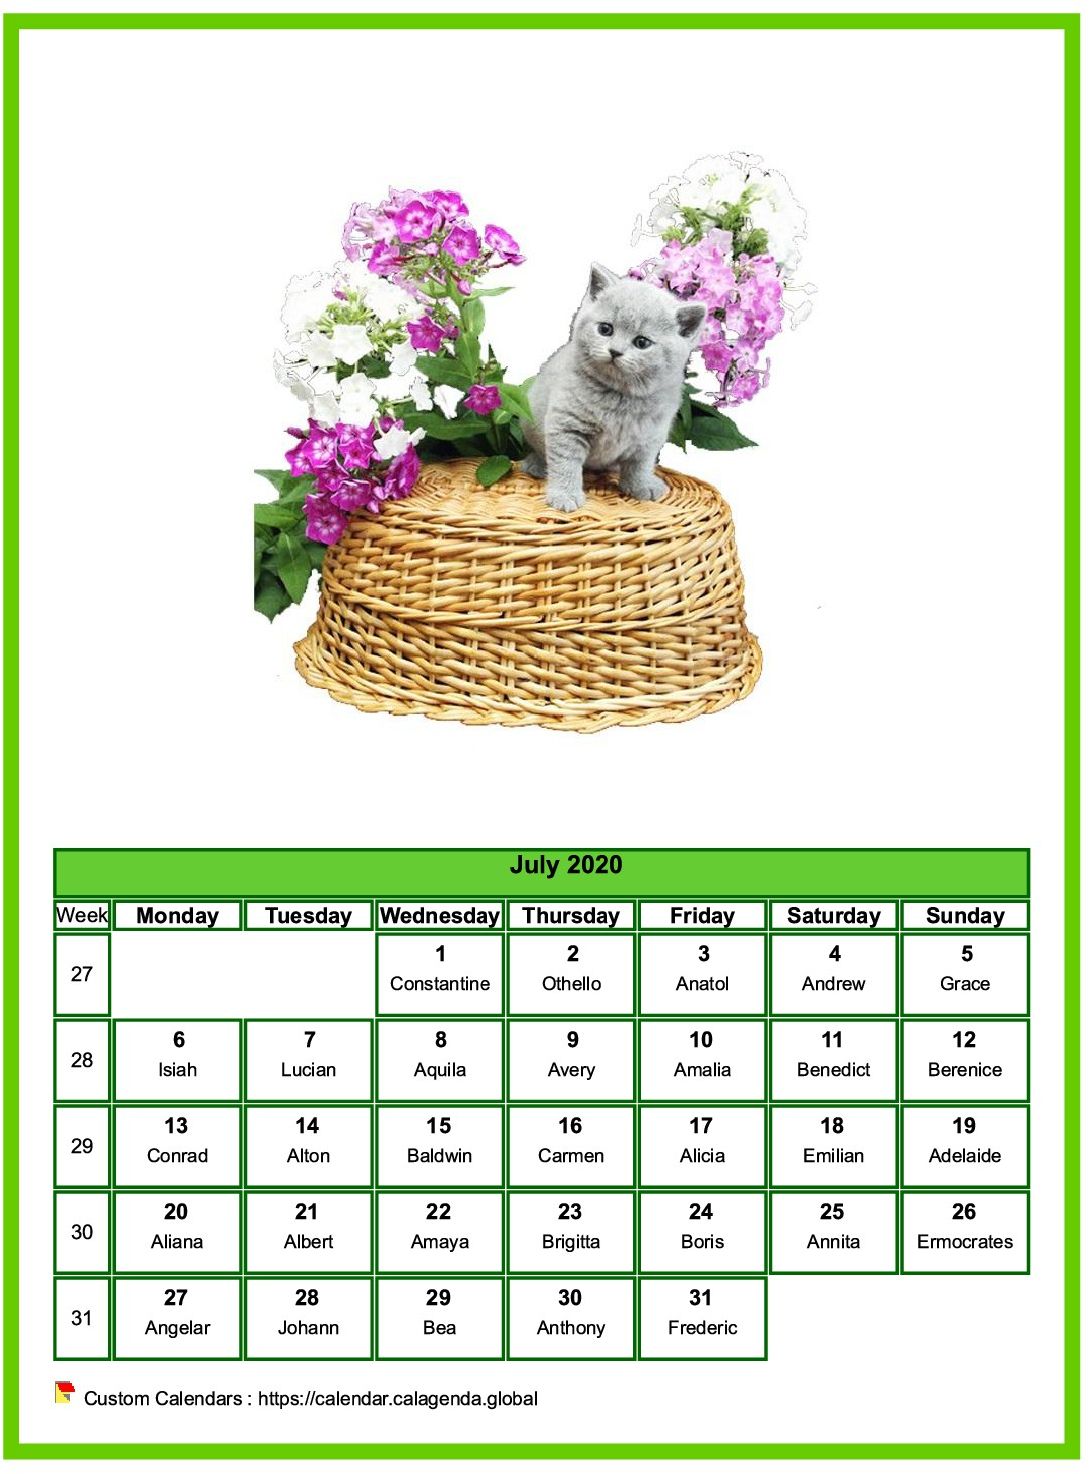 Calendar July 2020 cats